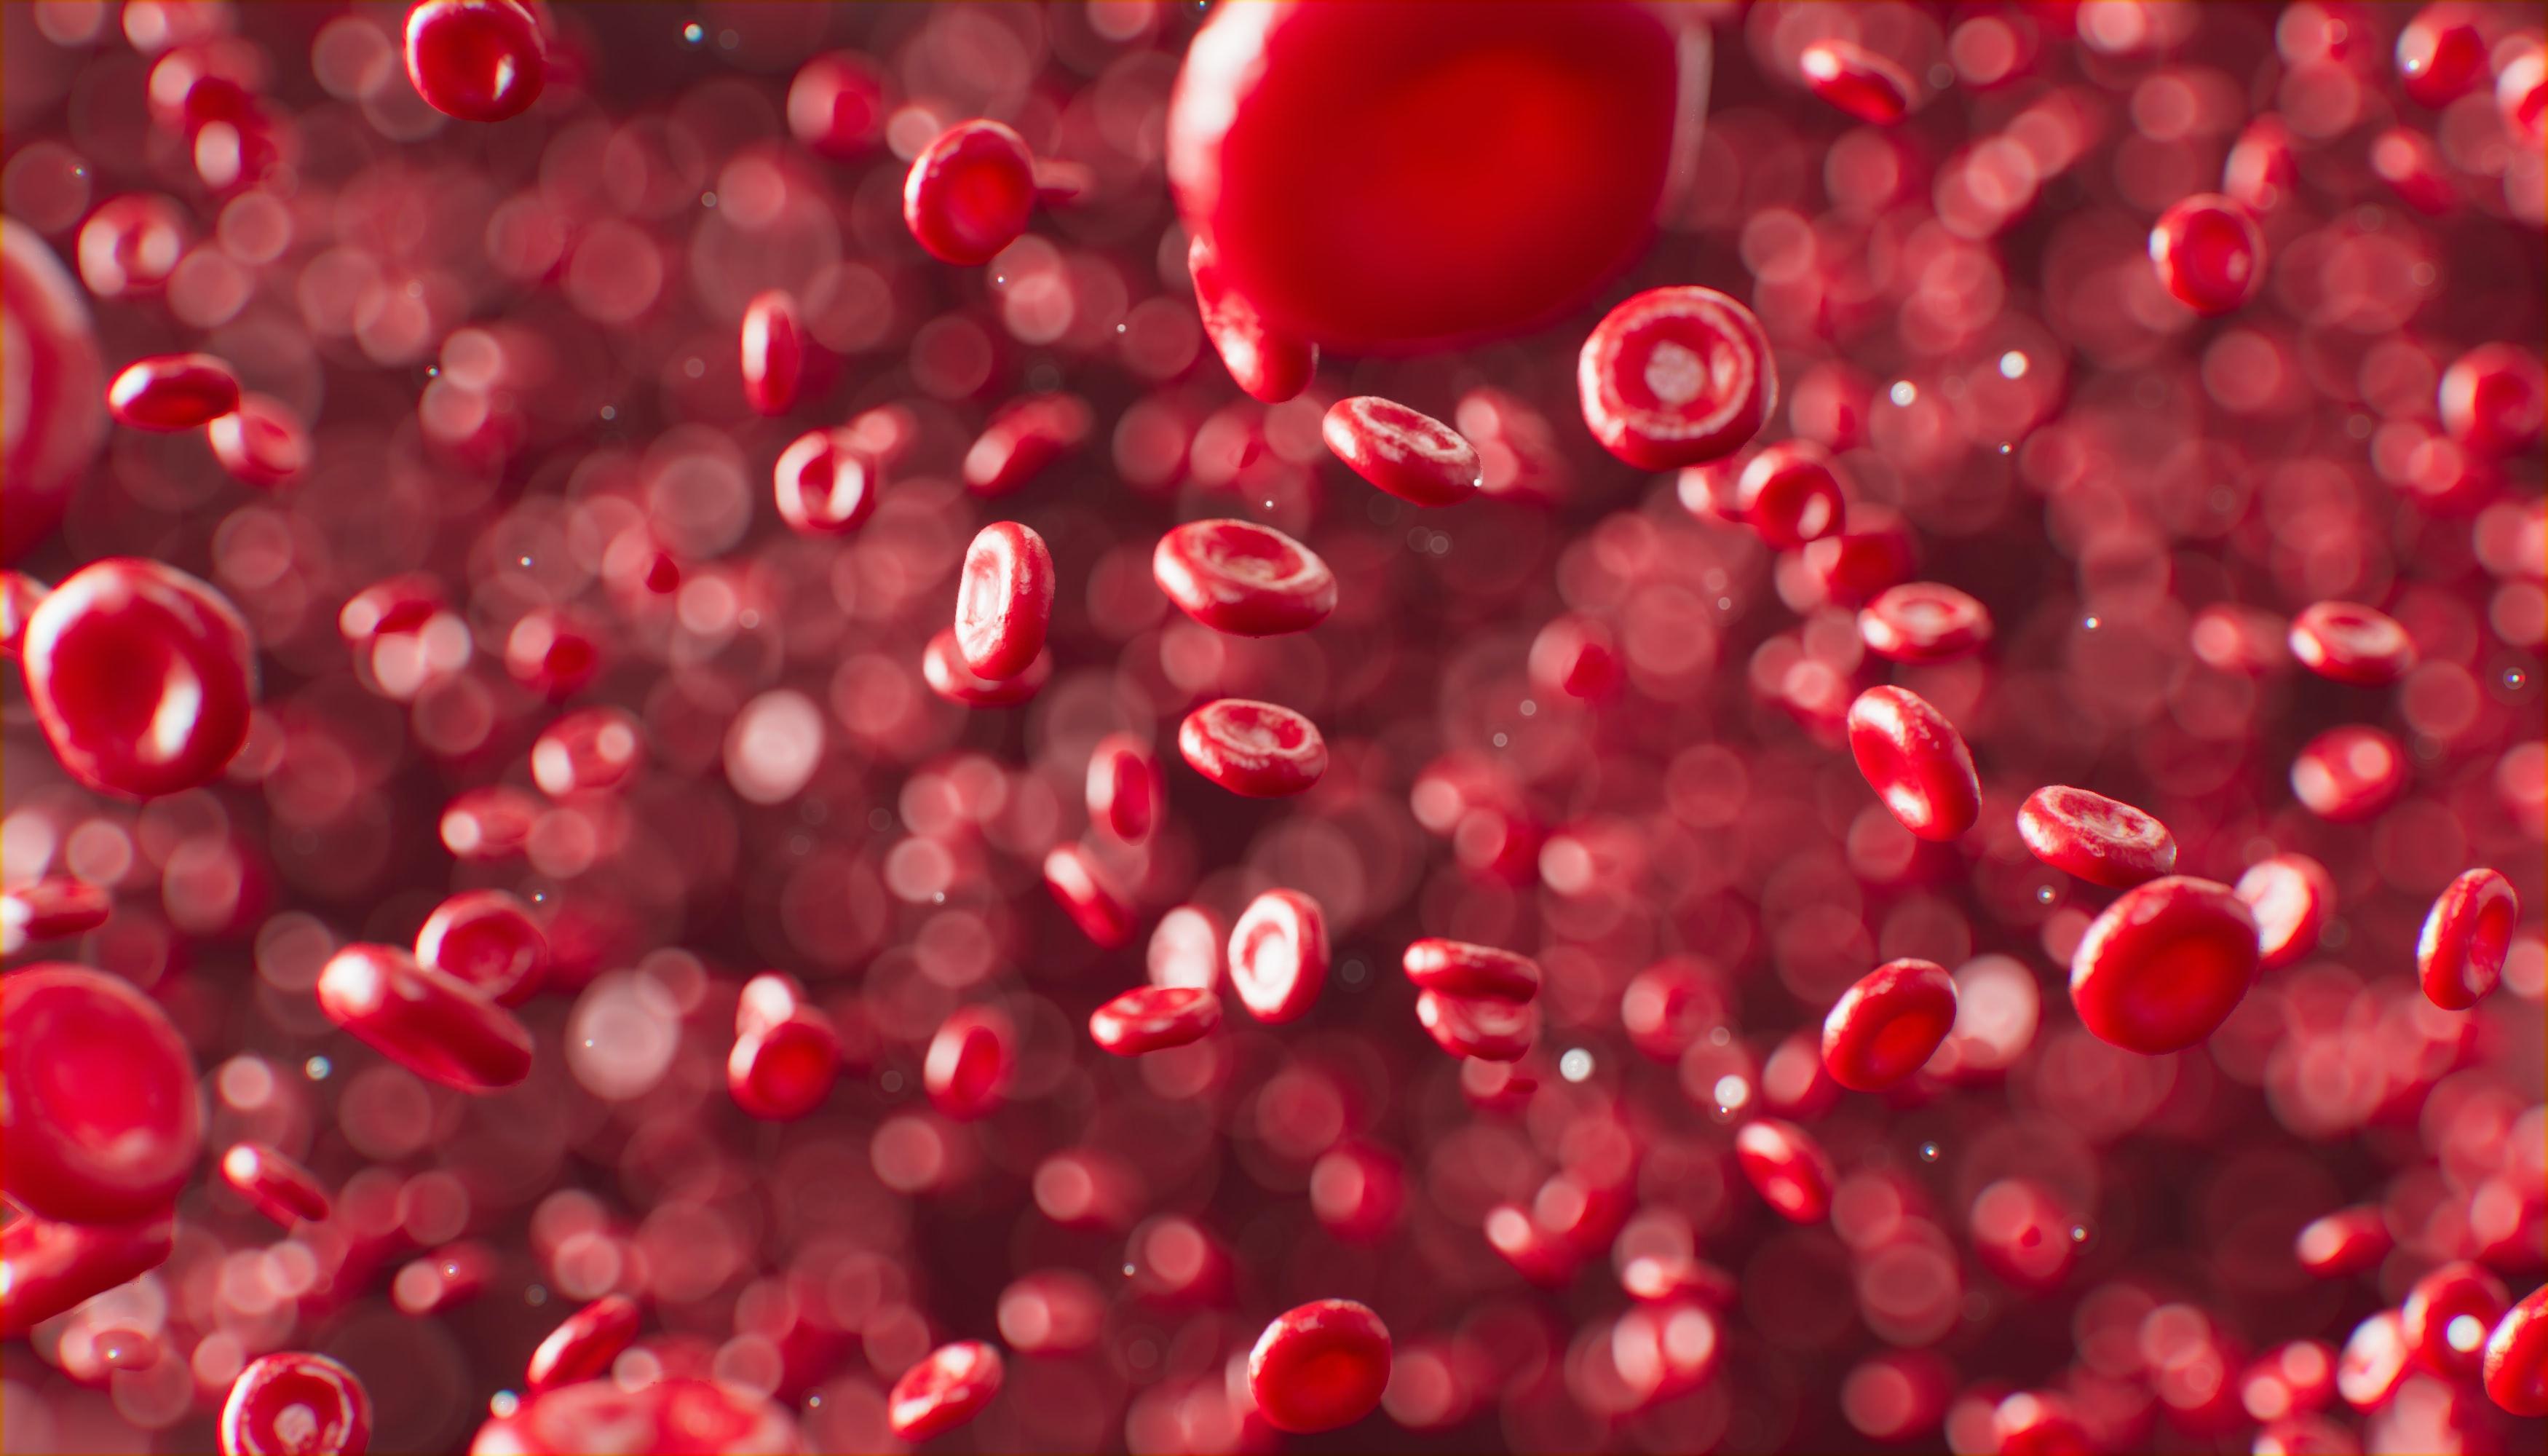 Blood cells. Credit Anirudh 